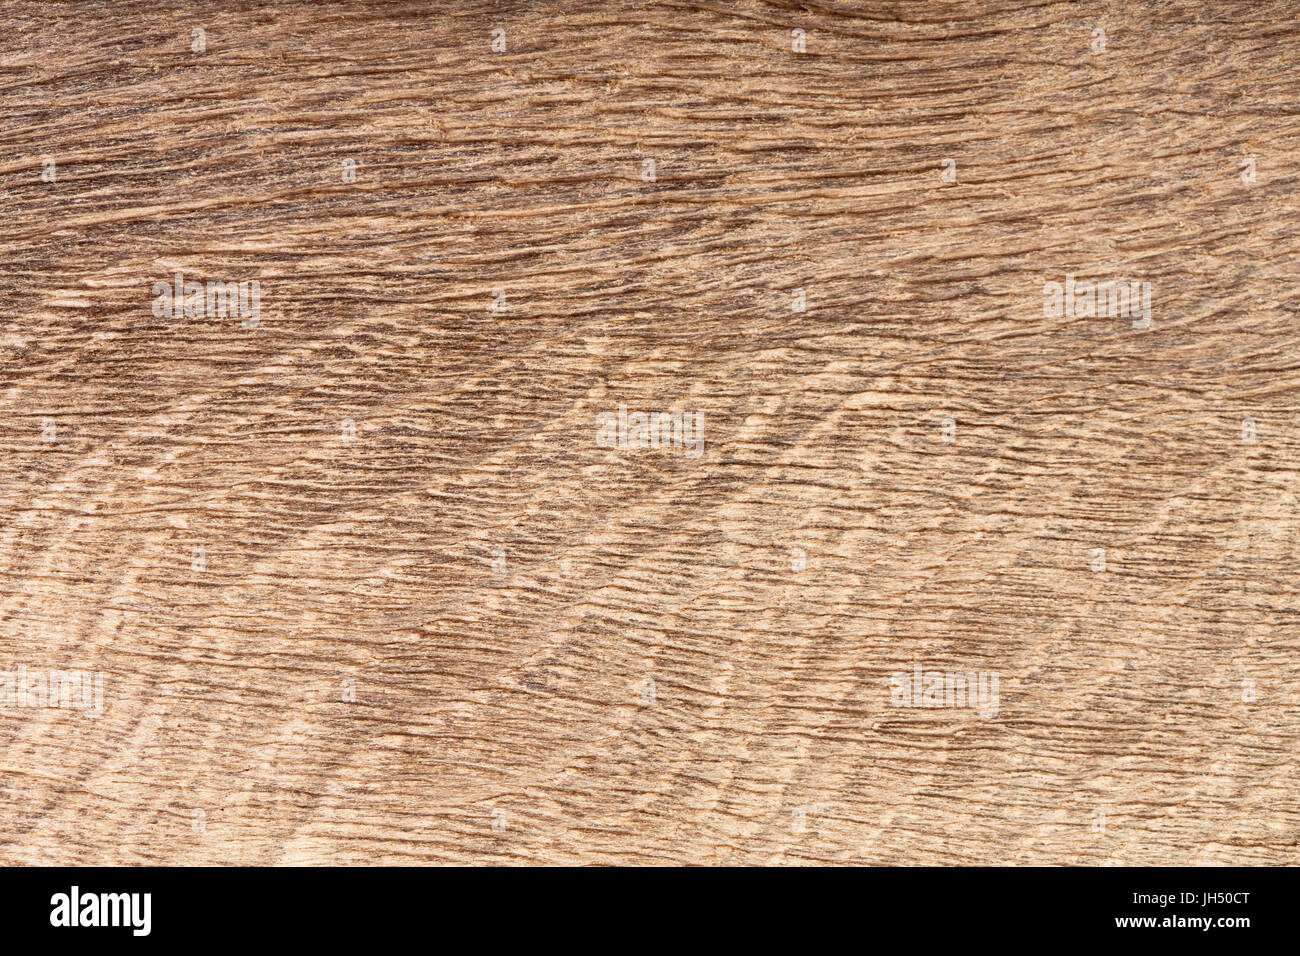 High resolution natural wood bog oak grain texture. Stock Photo